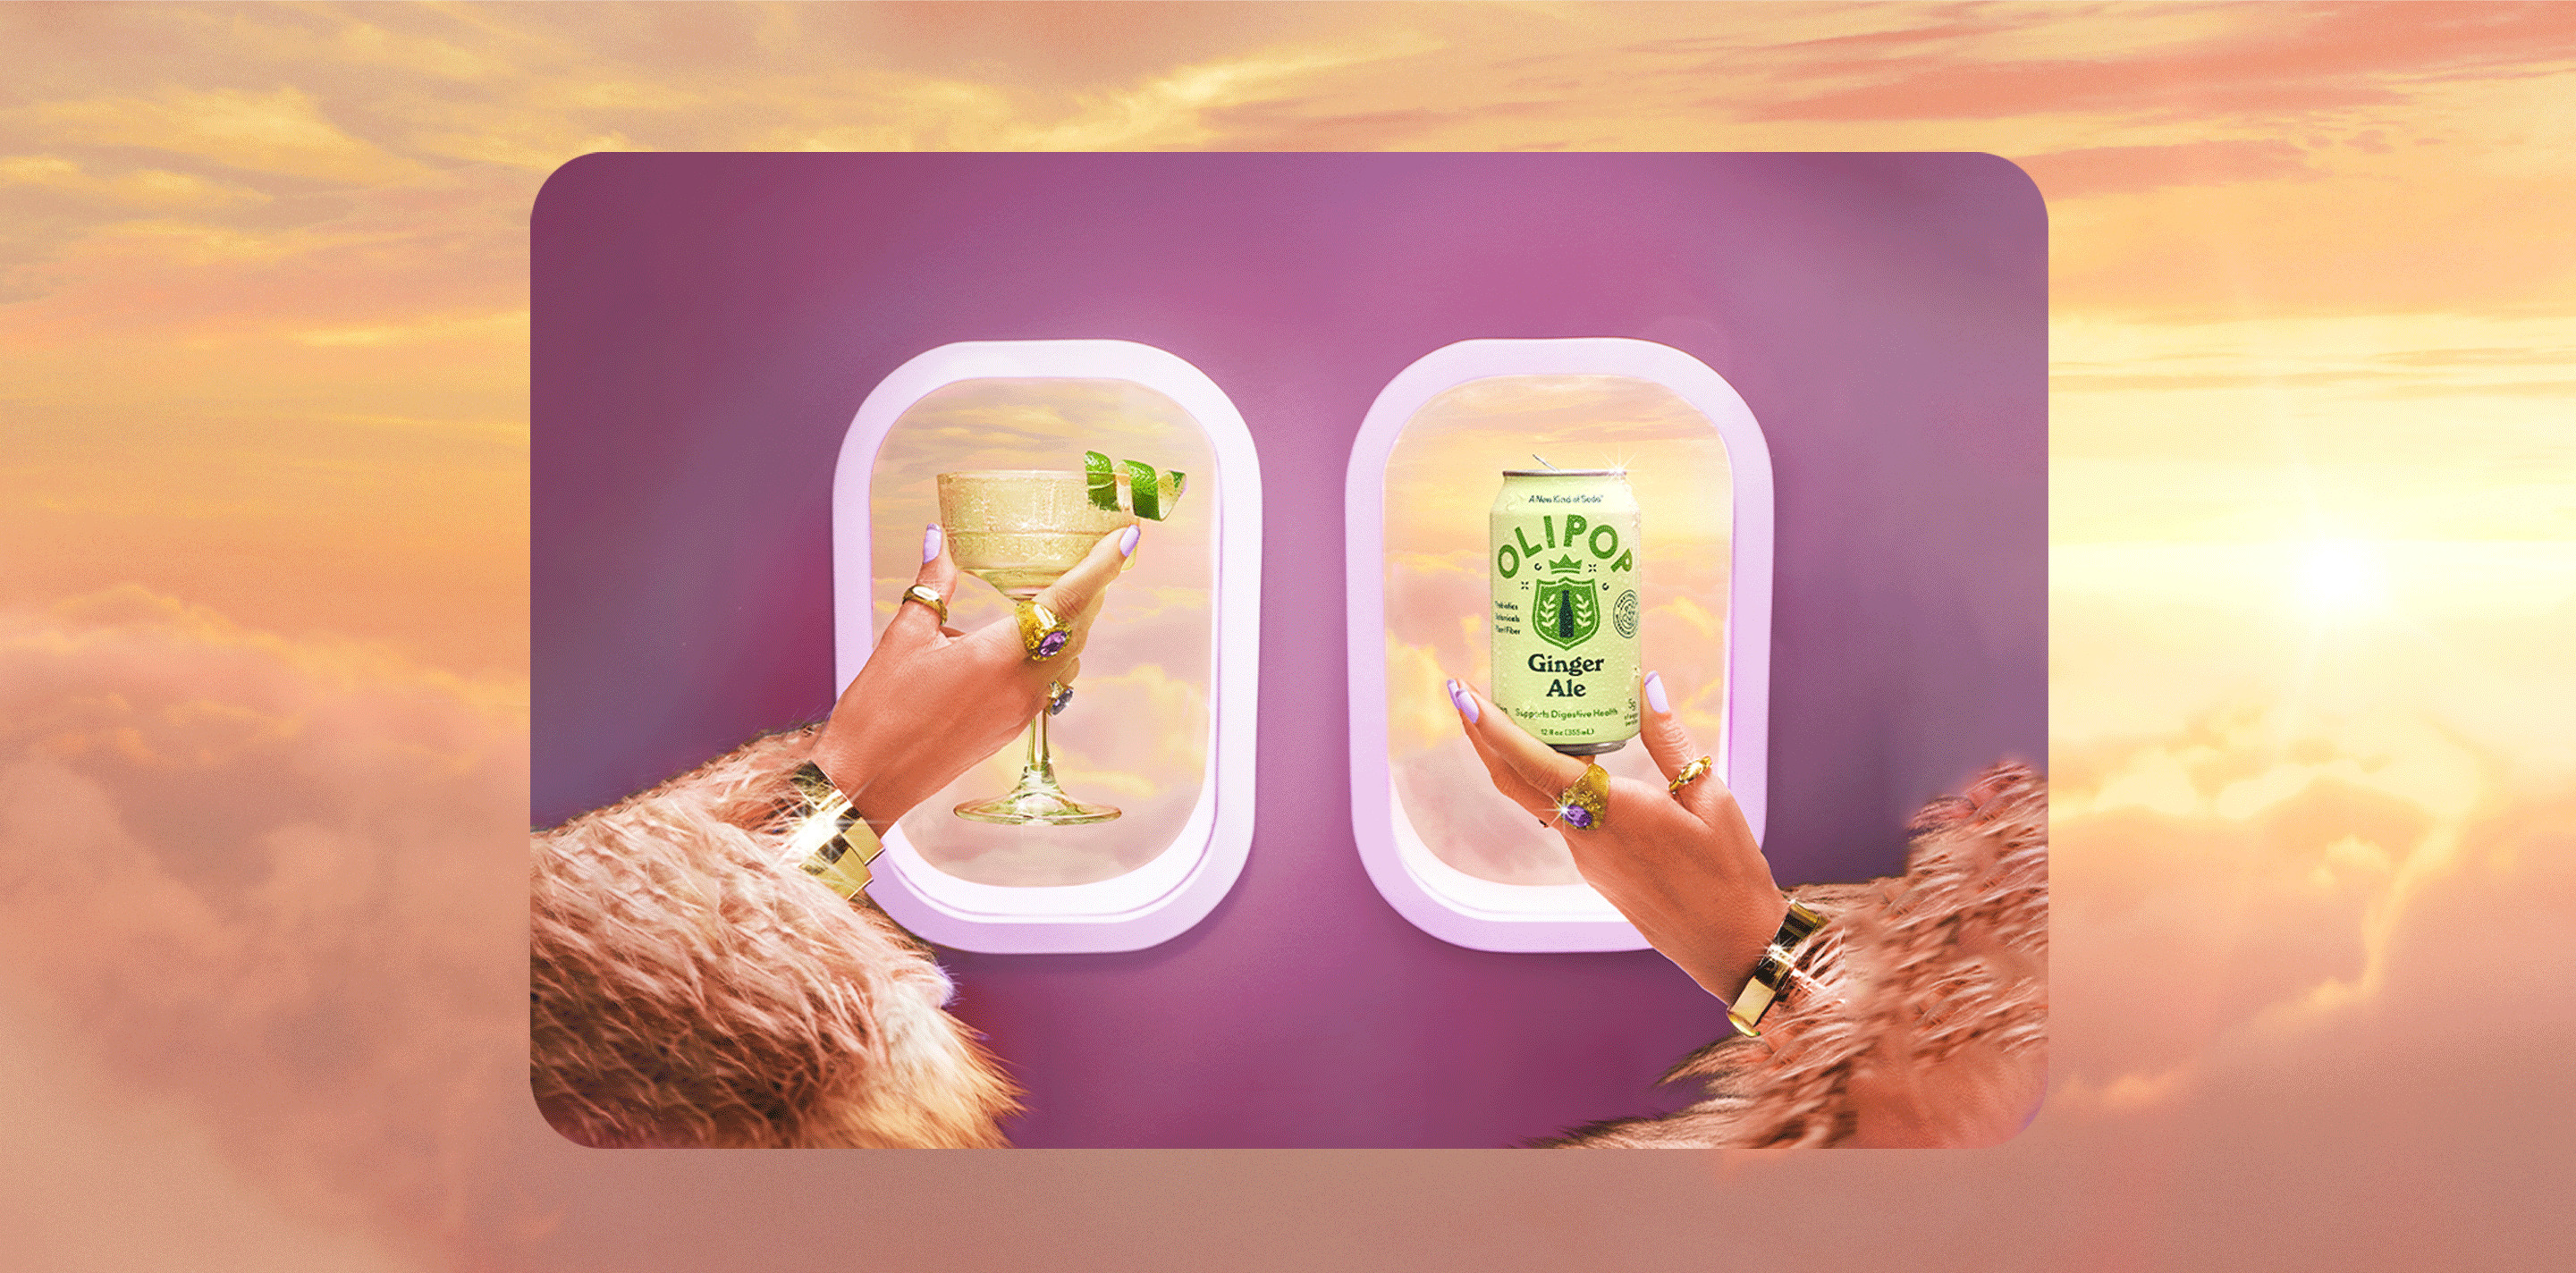 OLIPOP Besties sharing Ginger Ale on a flight